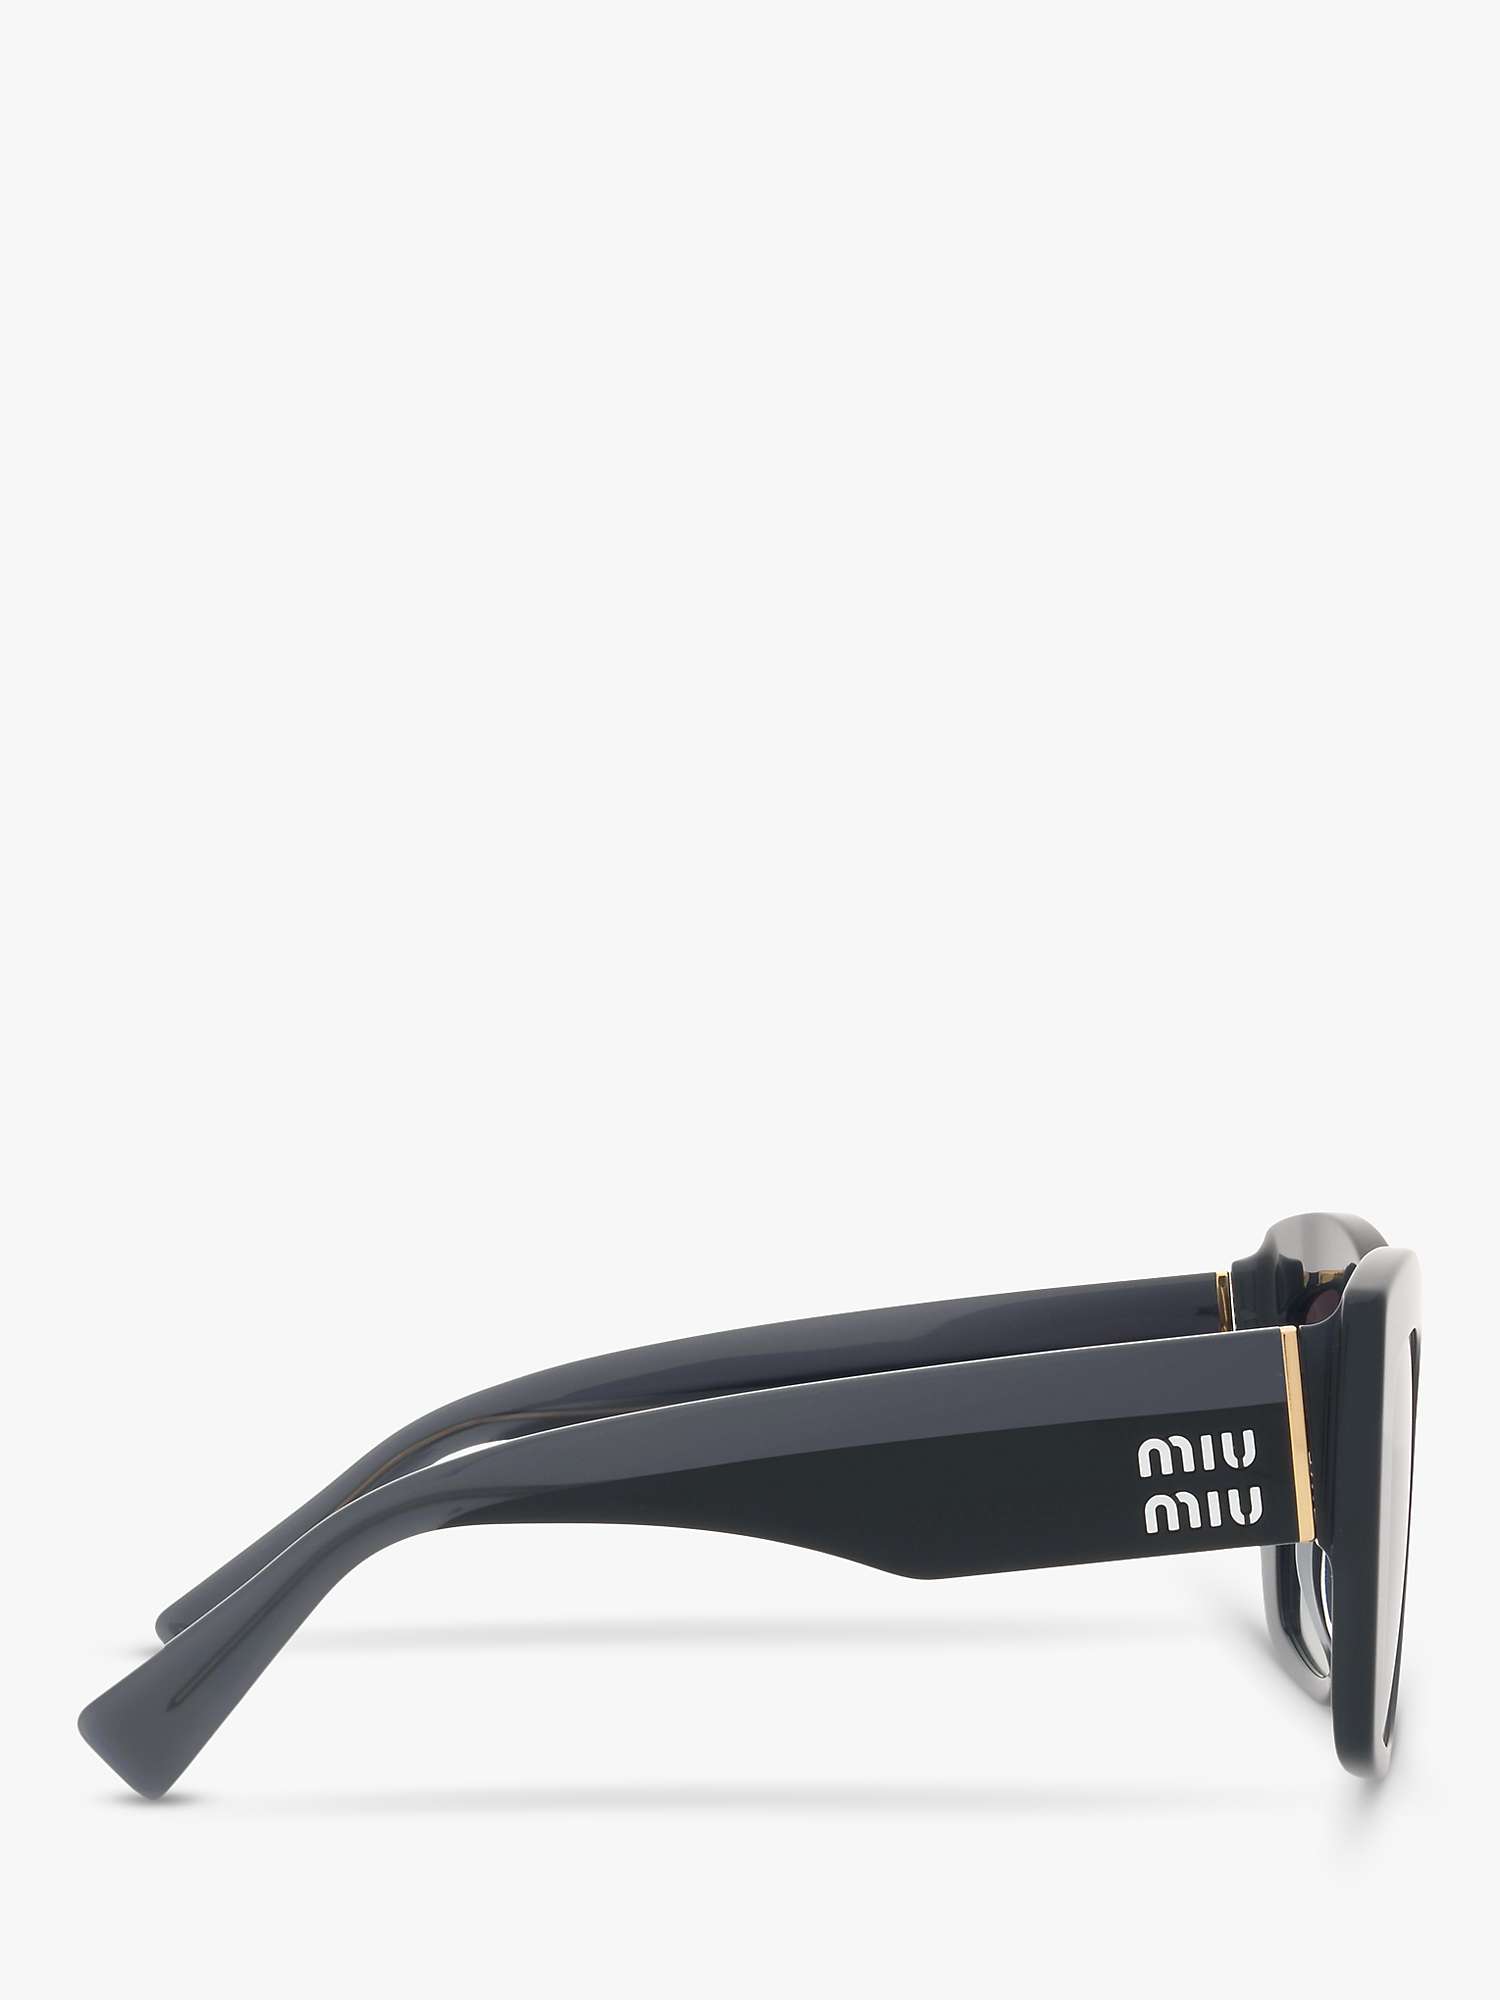 Buy Miu Miu MU 04WS Women's Square Sunglasses, Shiny Grey/Blue Gradient Online at johnlewis.com